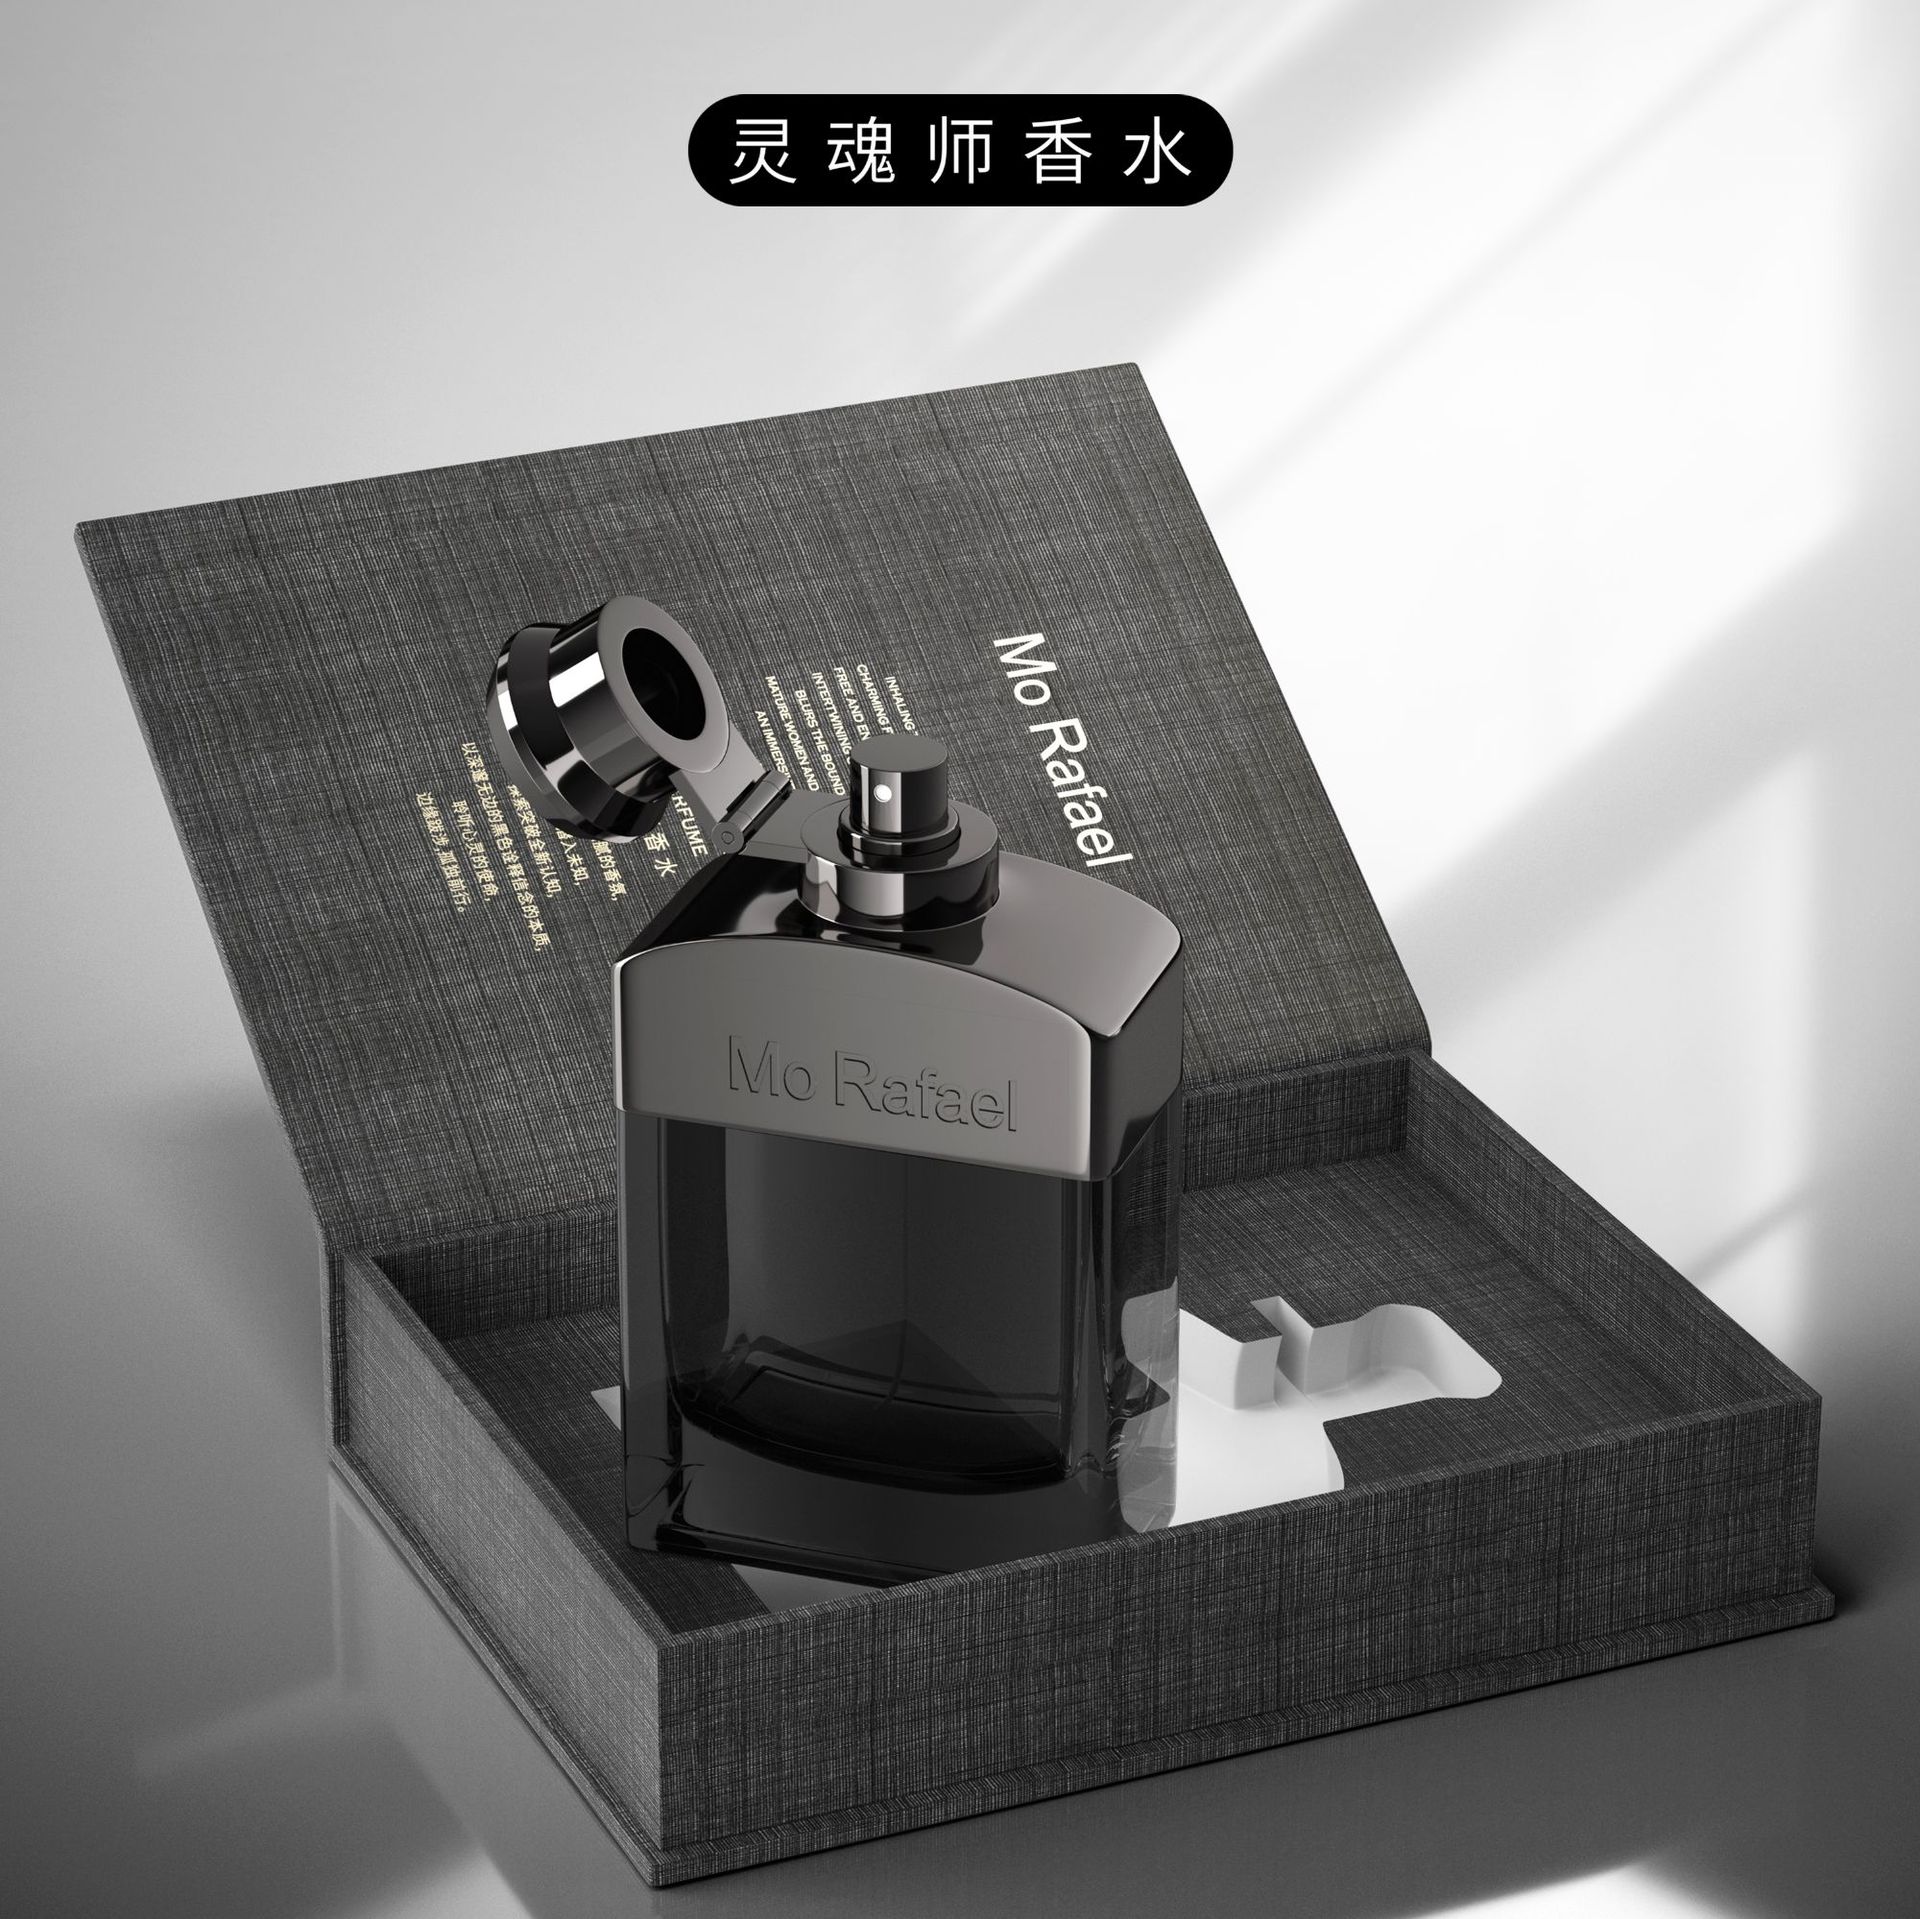 New Men's Soul Teacher Lone Brave Perfume Lasting Fragrance Exquisite Gift Box Perfume Wholesale